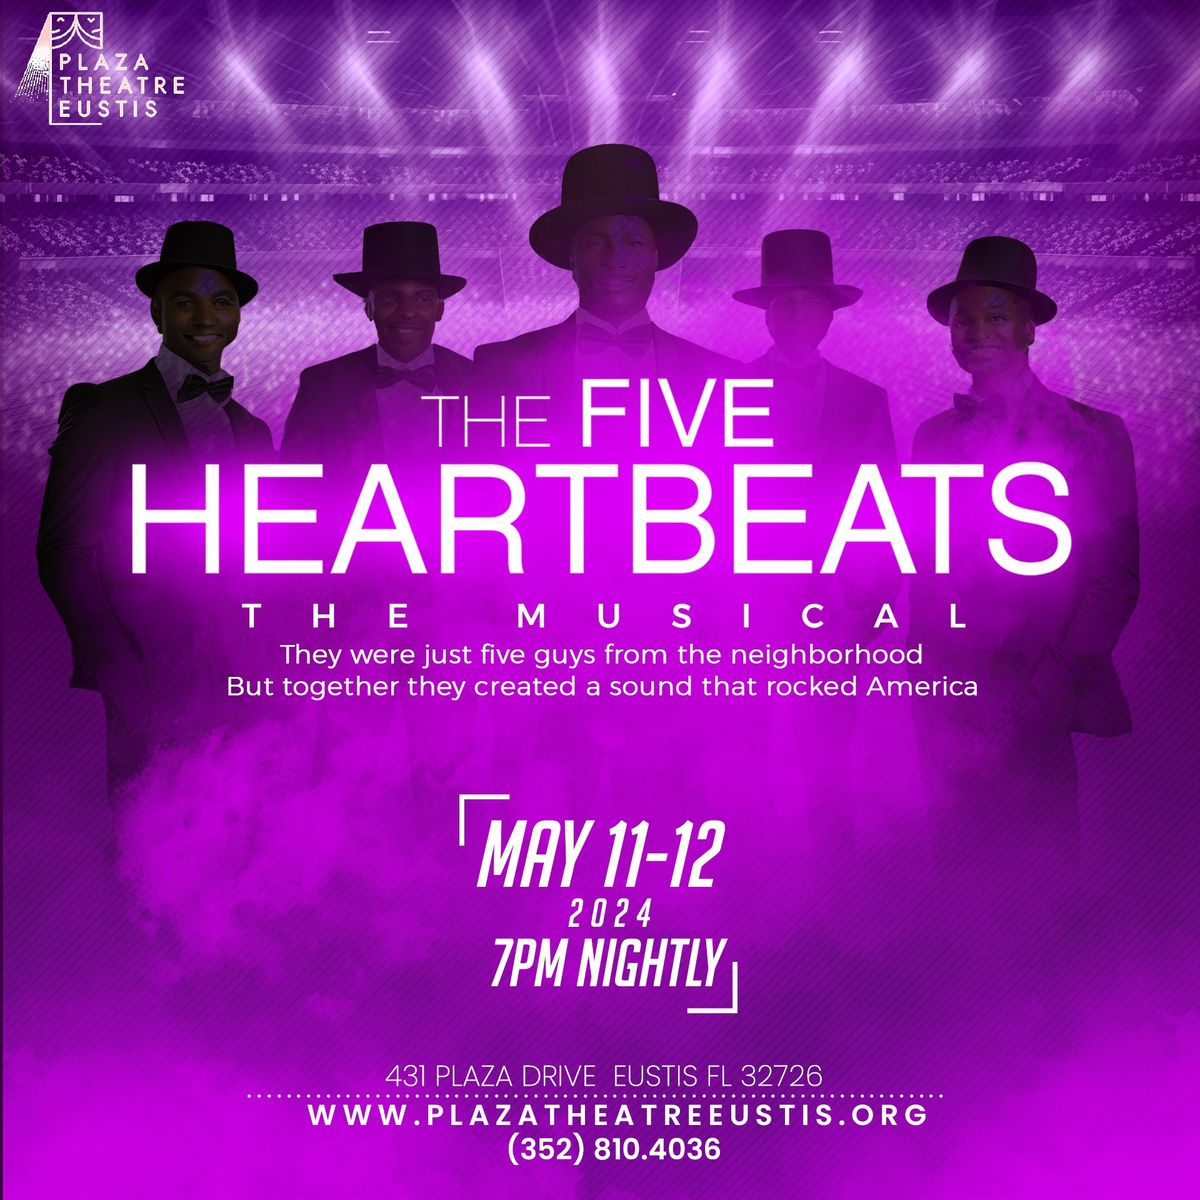 THE FIVE HEARTBEATS MUSICAL